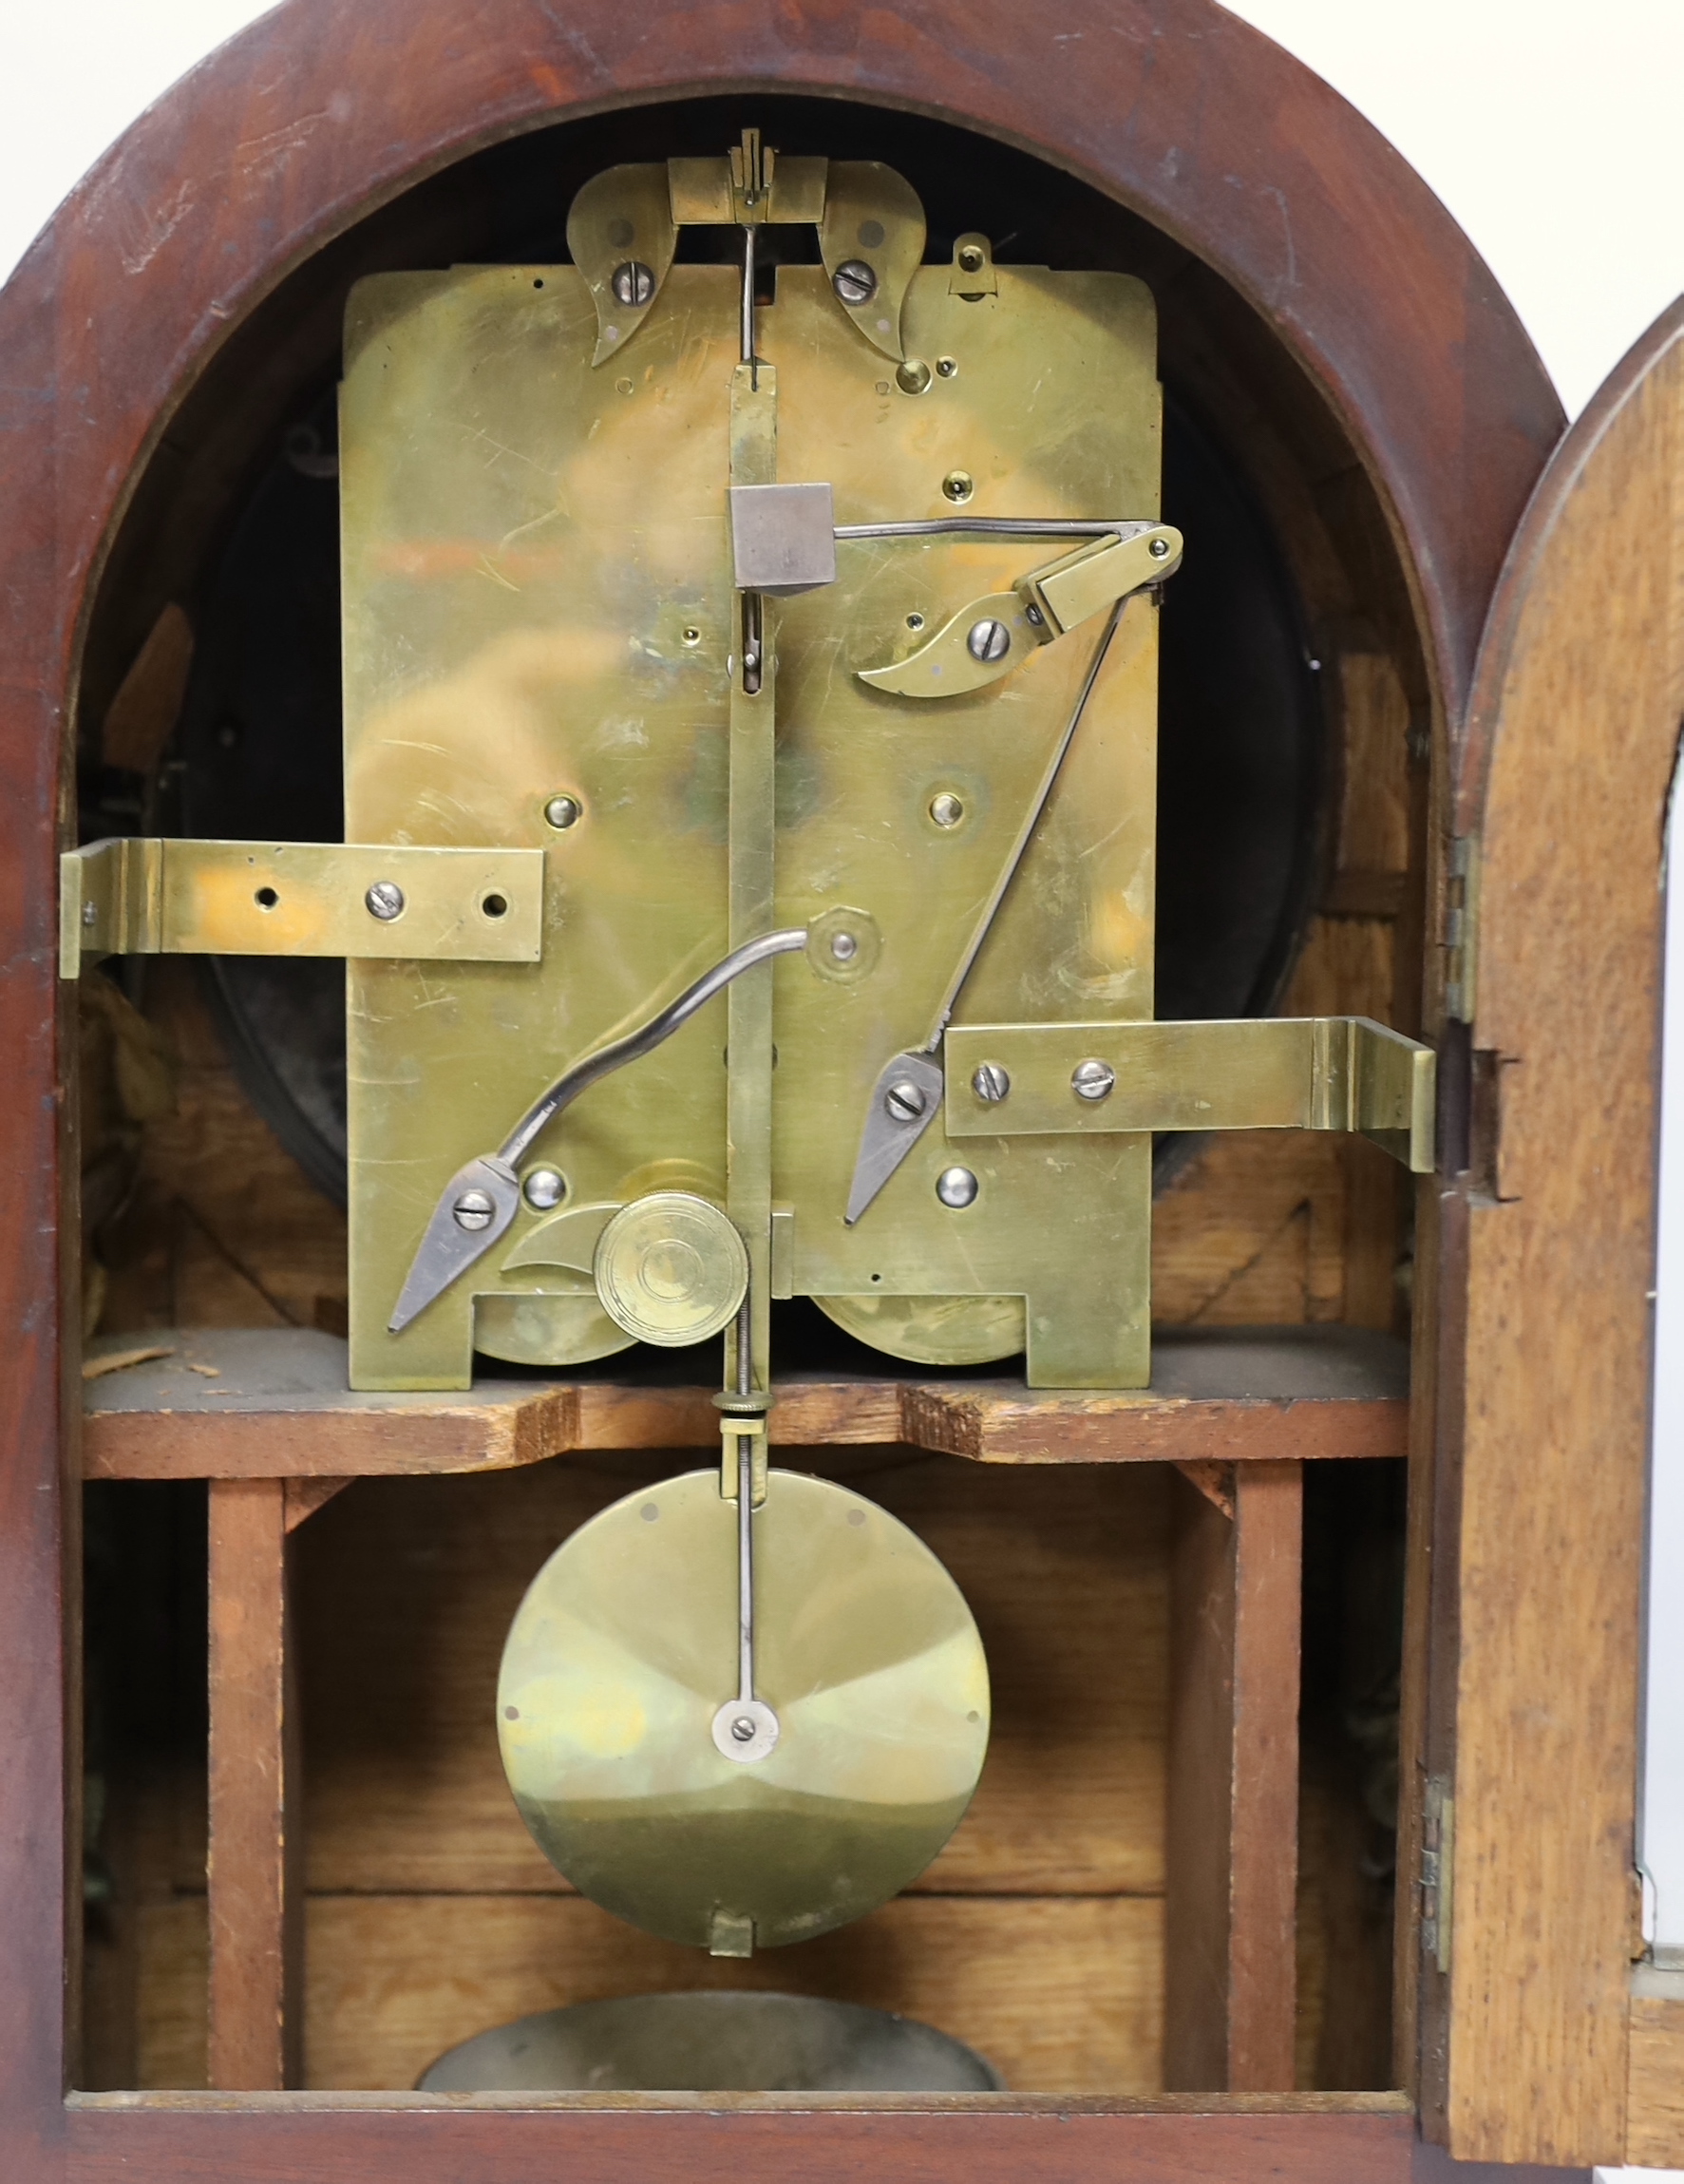 A William IV mahogany bracket clock, striking on a bell, enamel face with painted ‘Marlborough’, 38cm high